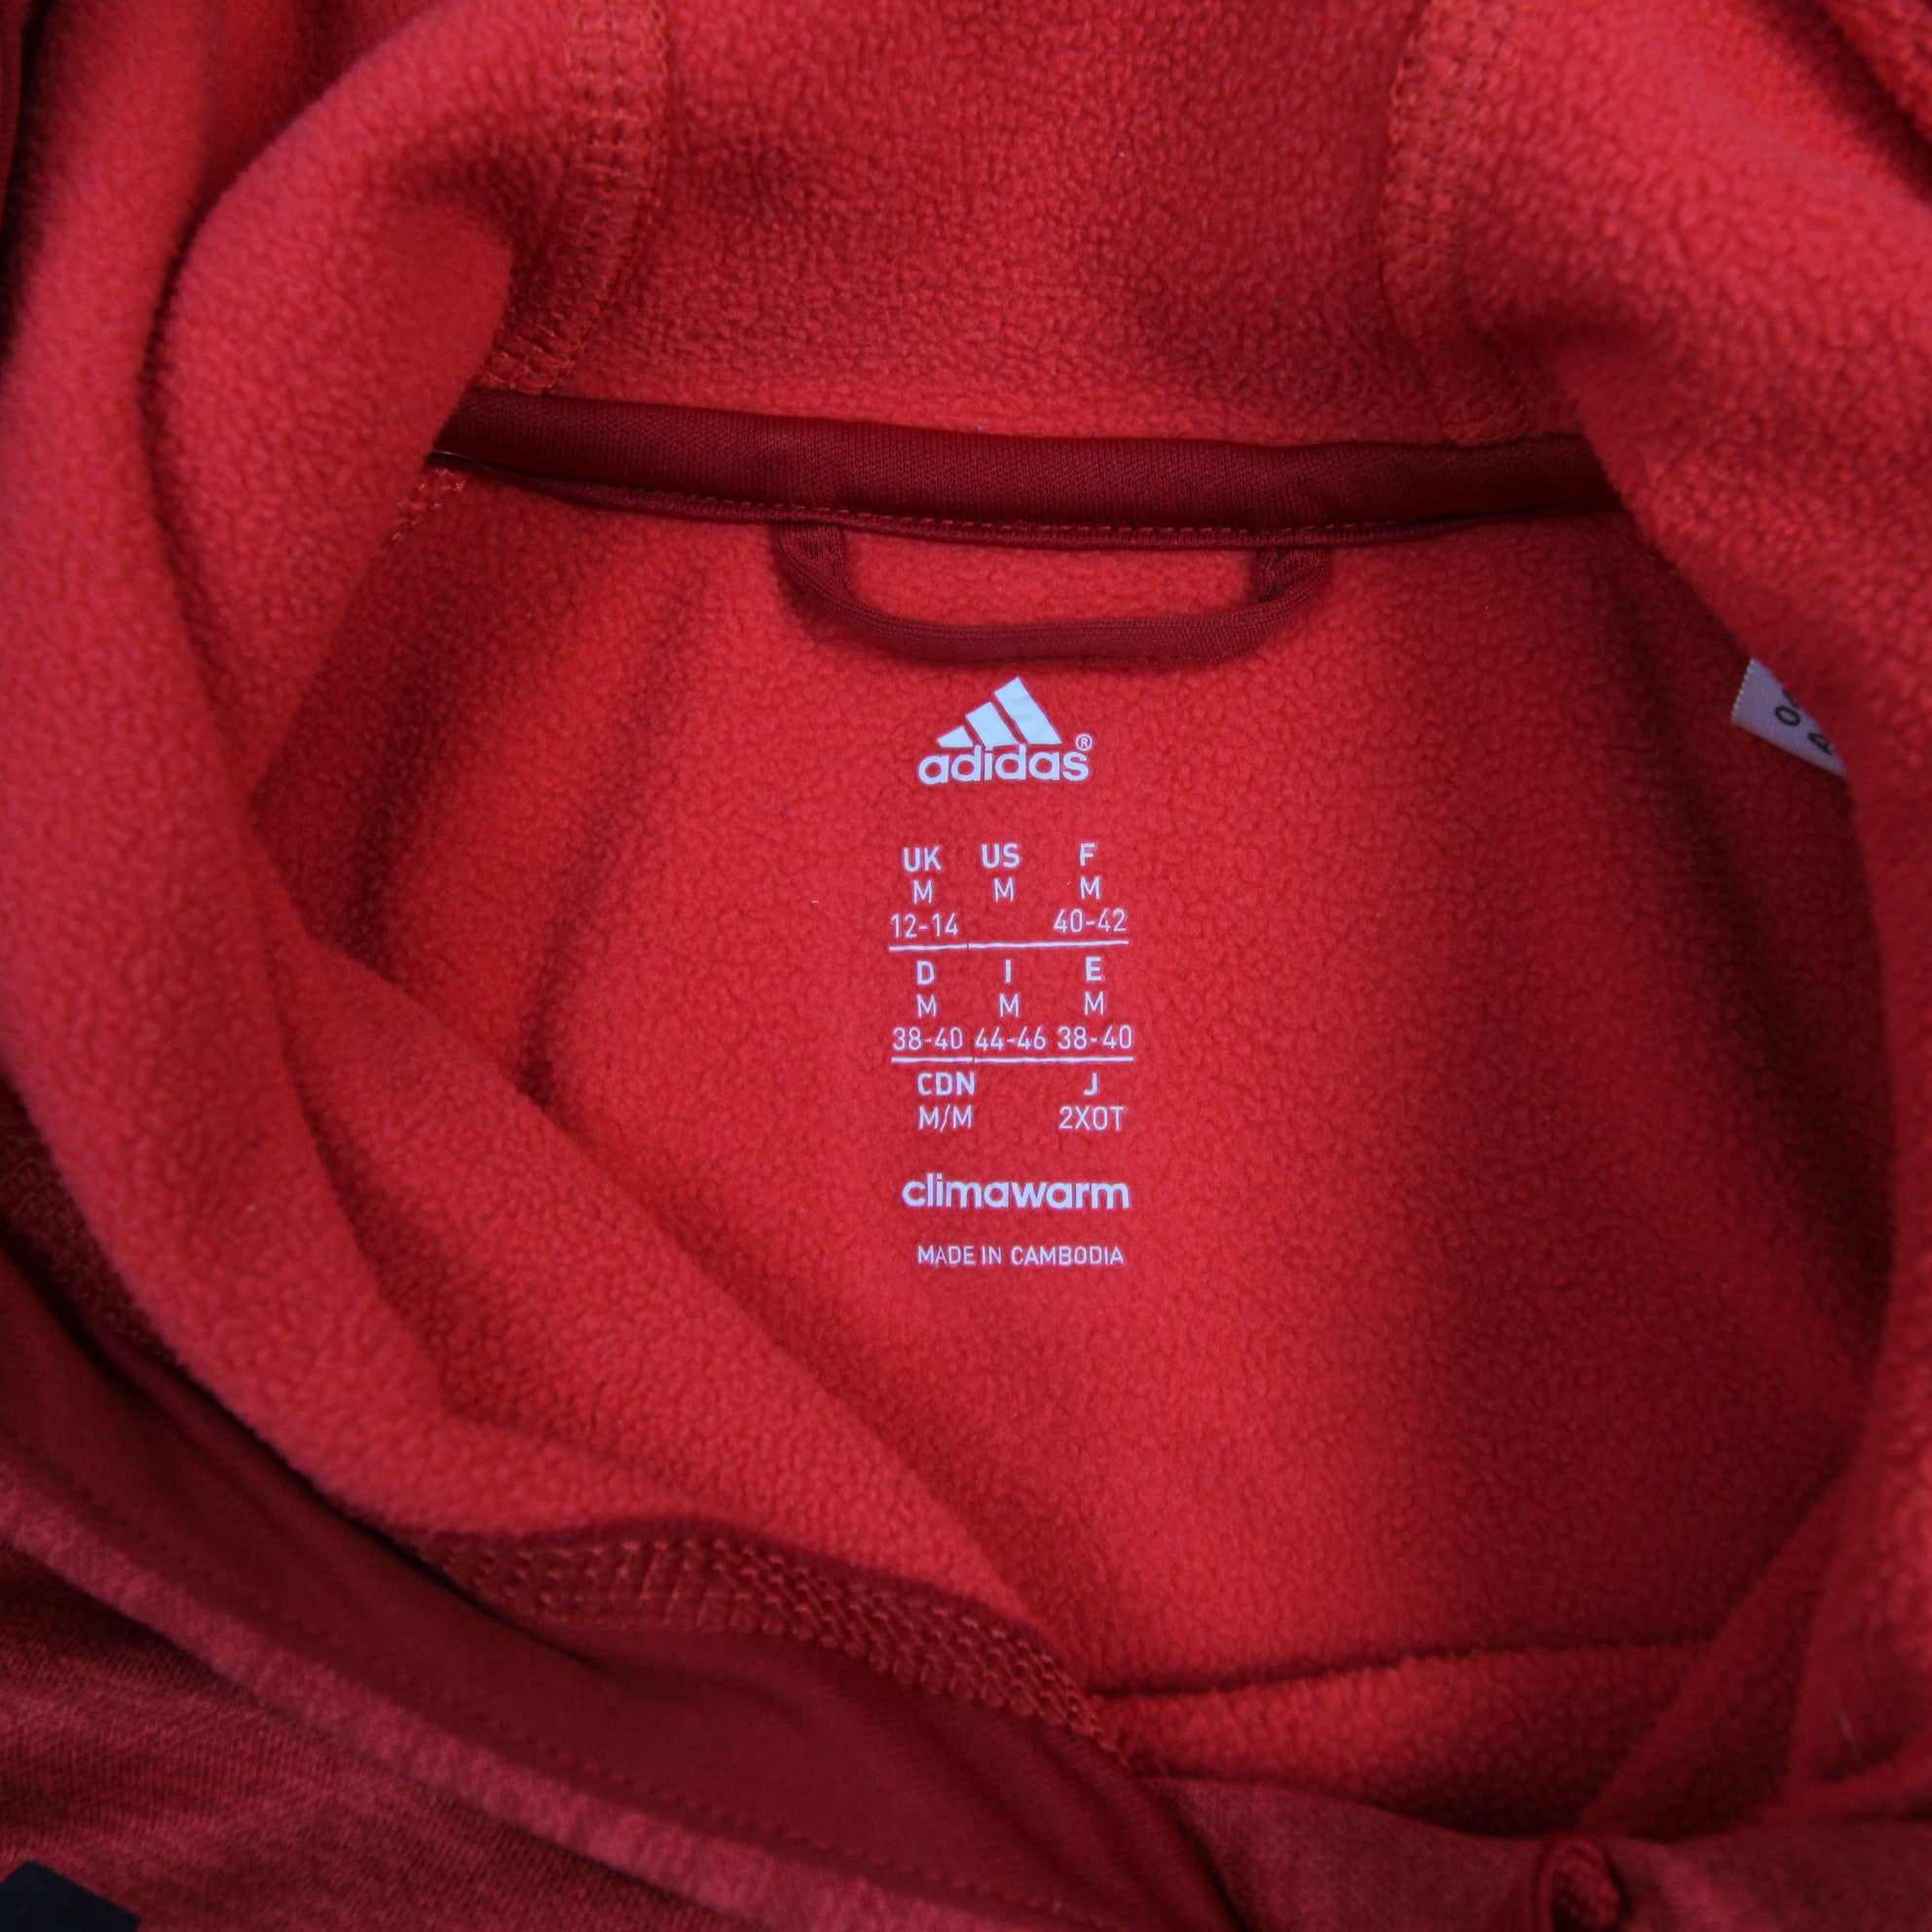 university of louisville Cardinals red adidas hoodie sweatshirt size small